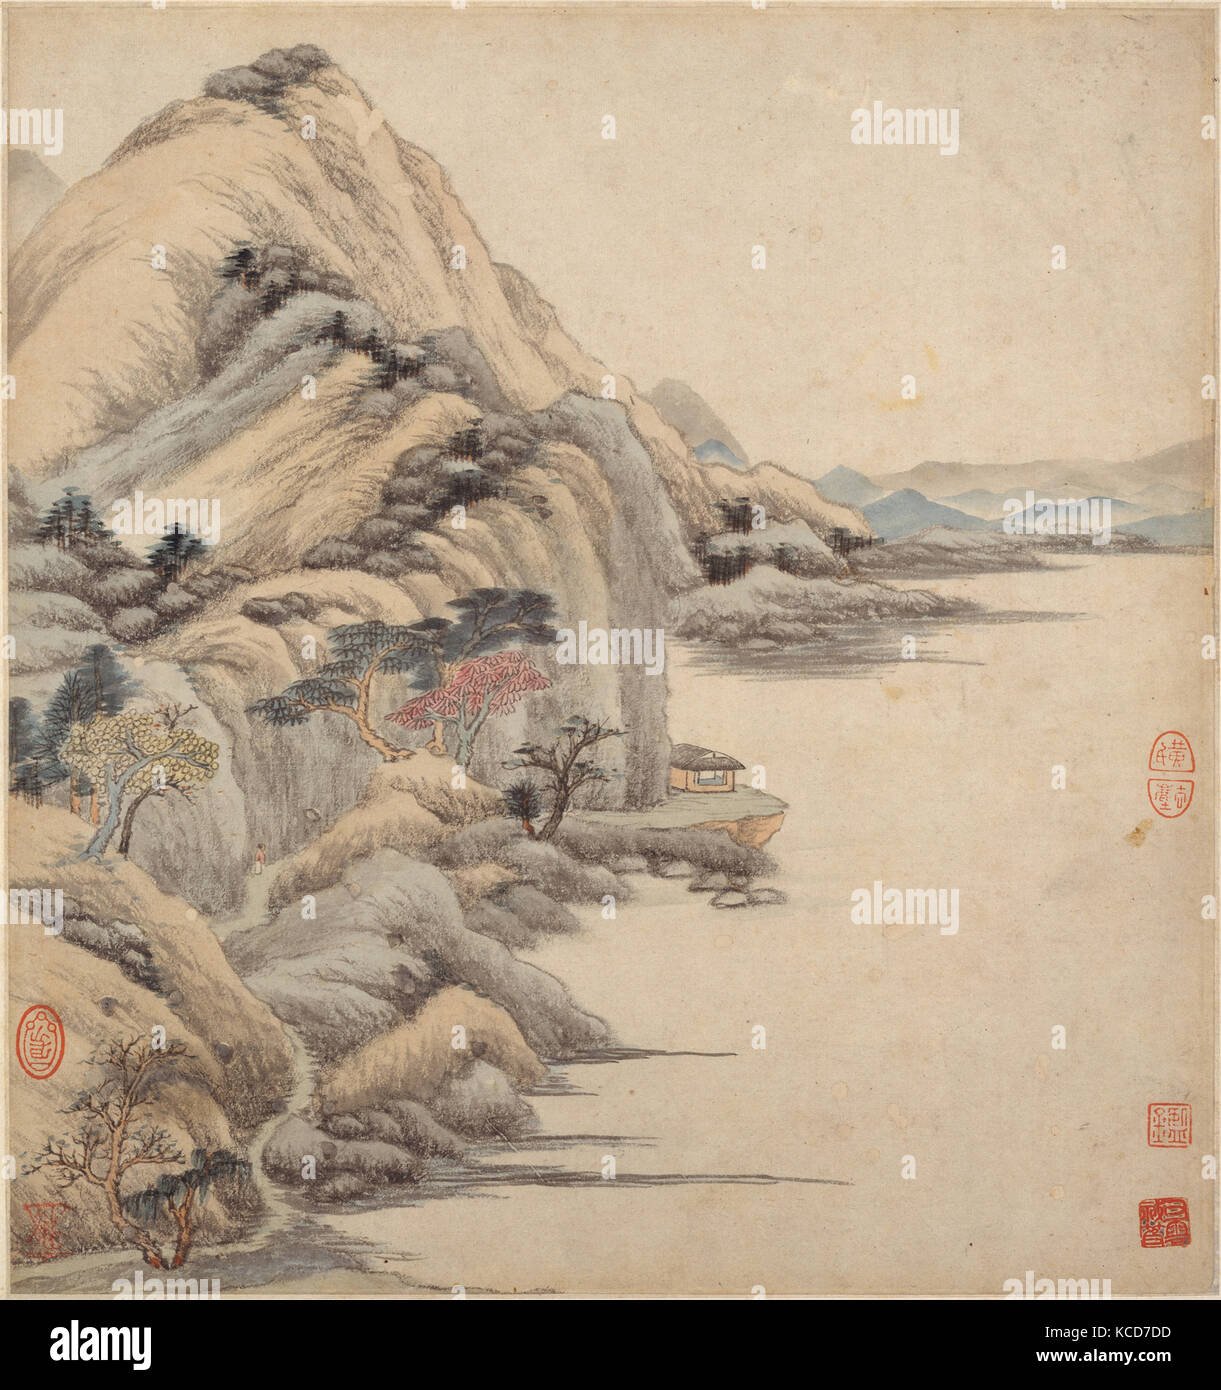 清 王鑑 仿古山水圖 冊 紙本, Landschaften im Stile der alten Meister, Wang Jian, 17. Jahrhundert Stockfoto